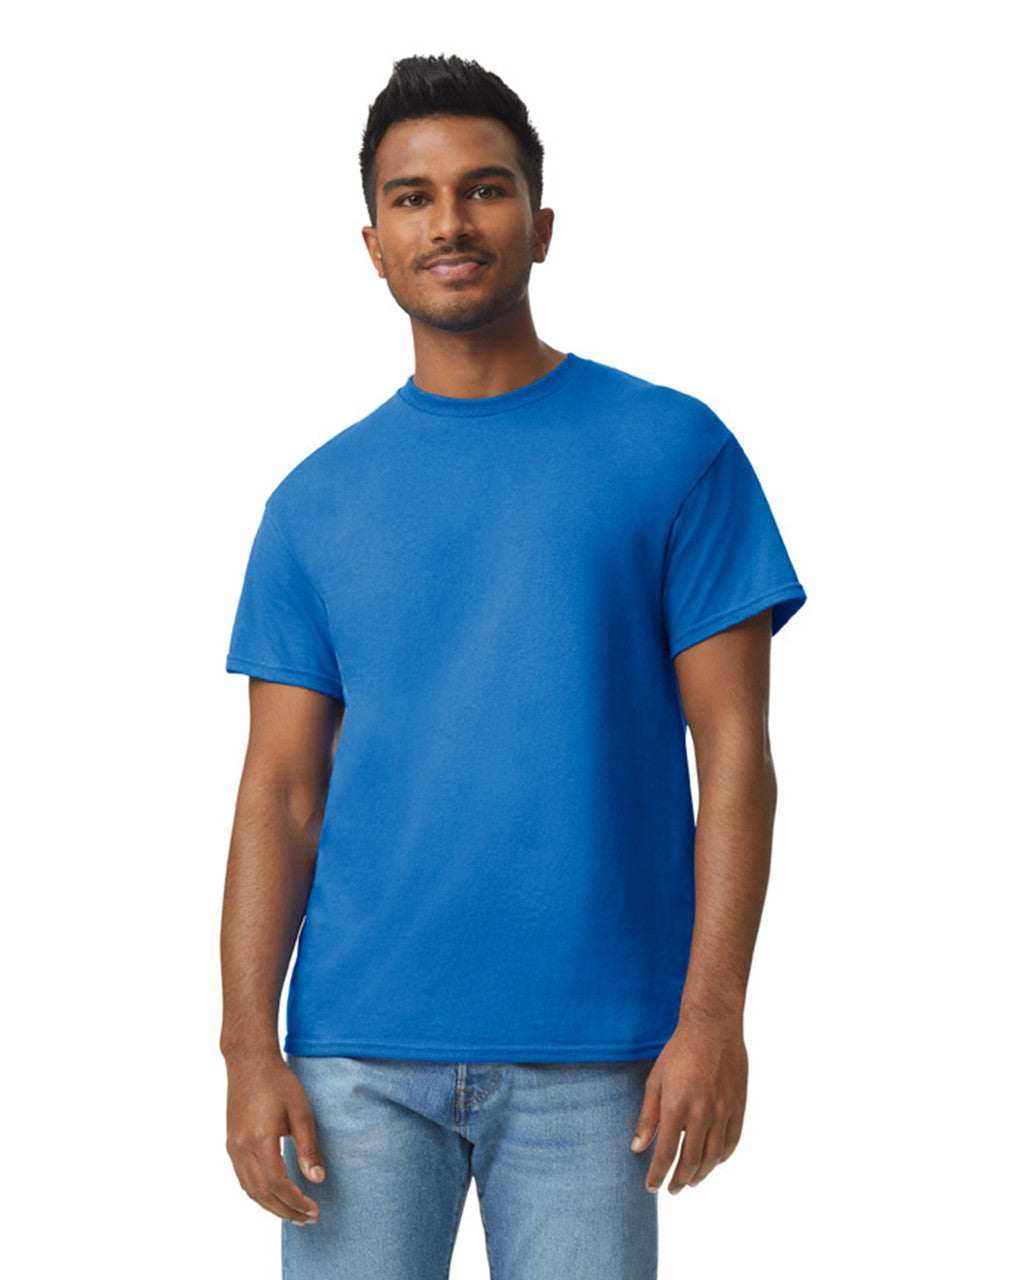 Camiseta Adulto Royal Gildan Ref. 5000